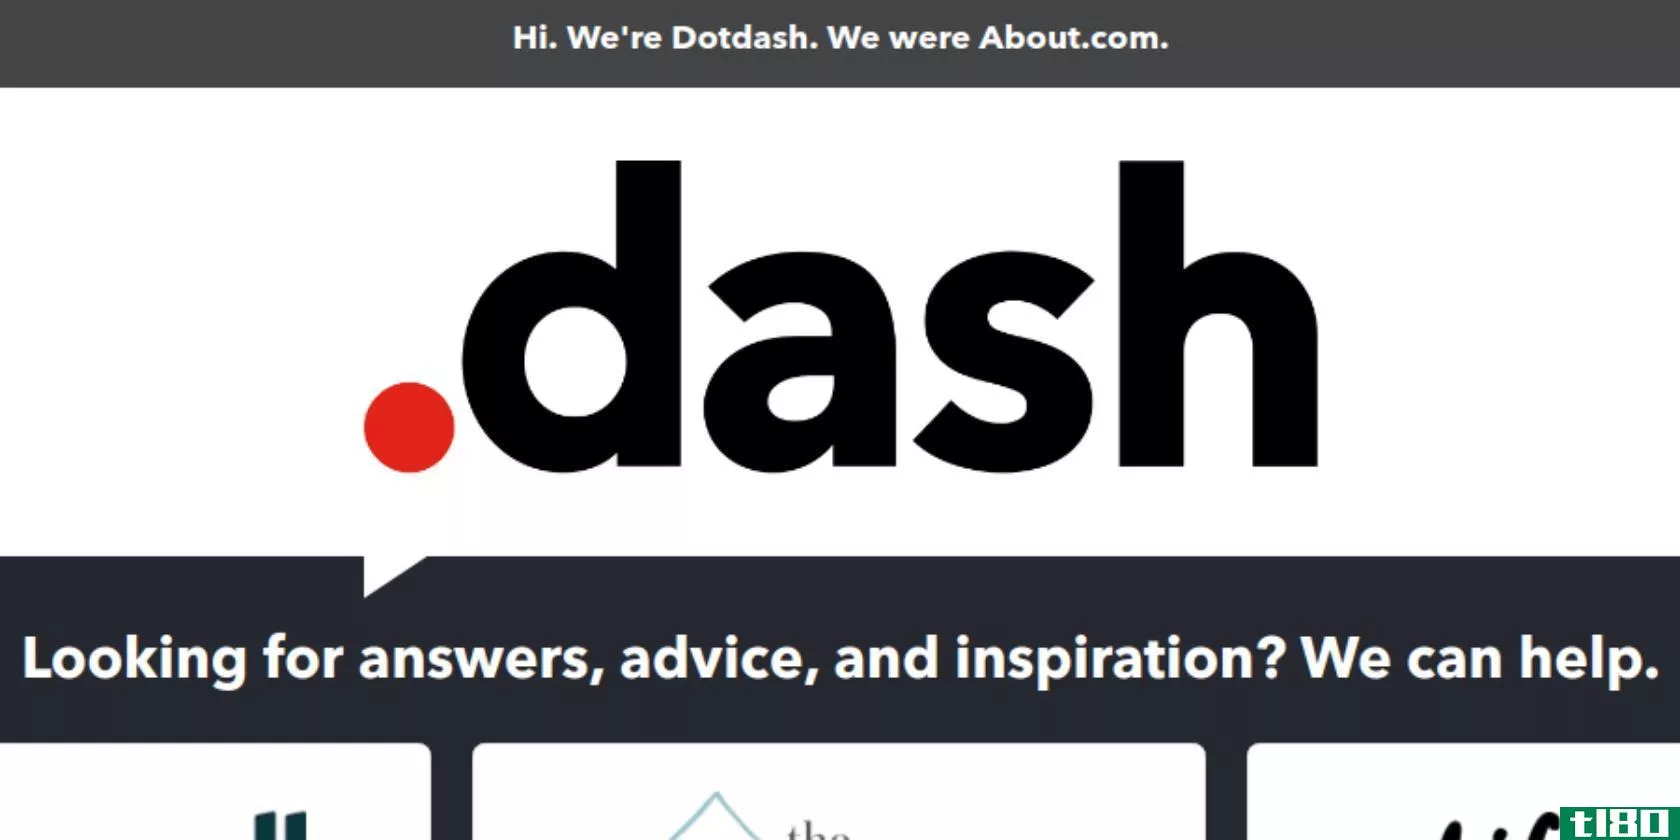 dotdash-about-com-rebranding